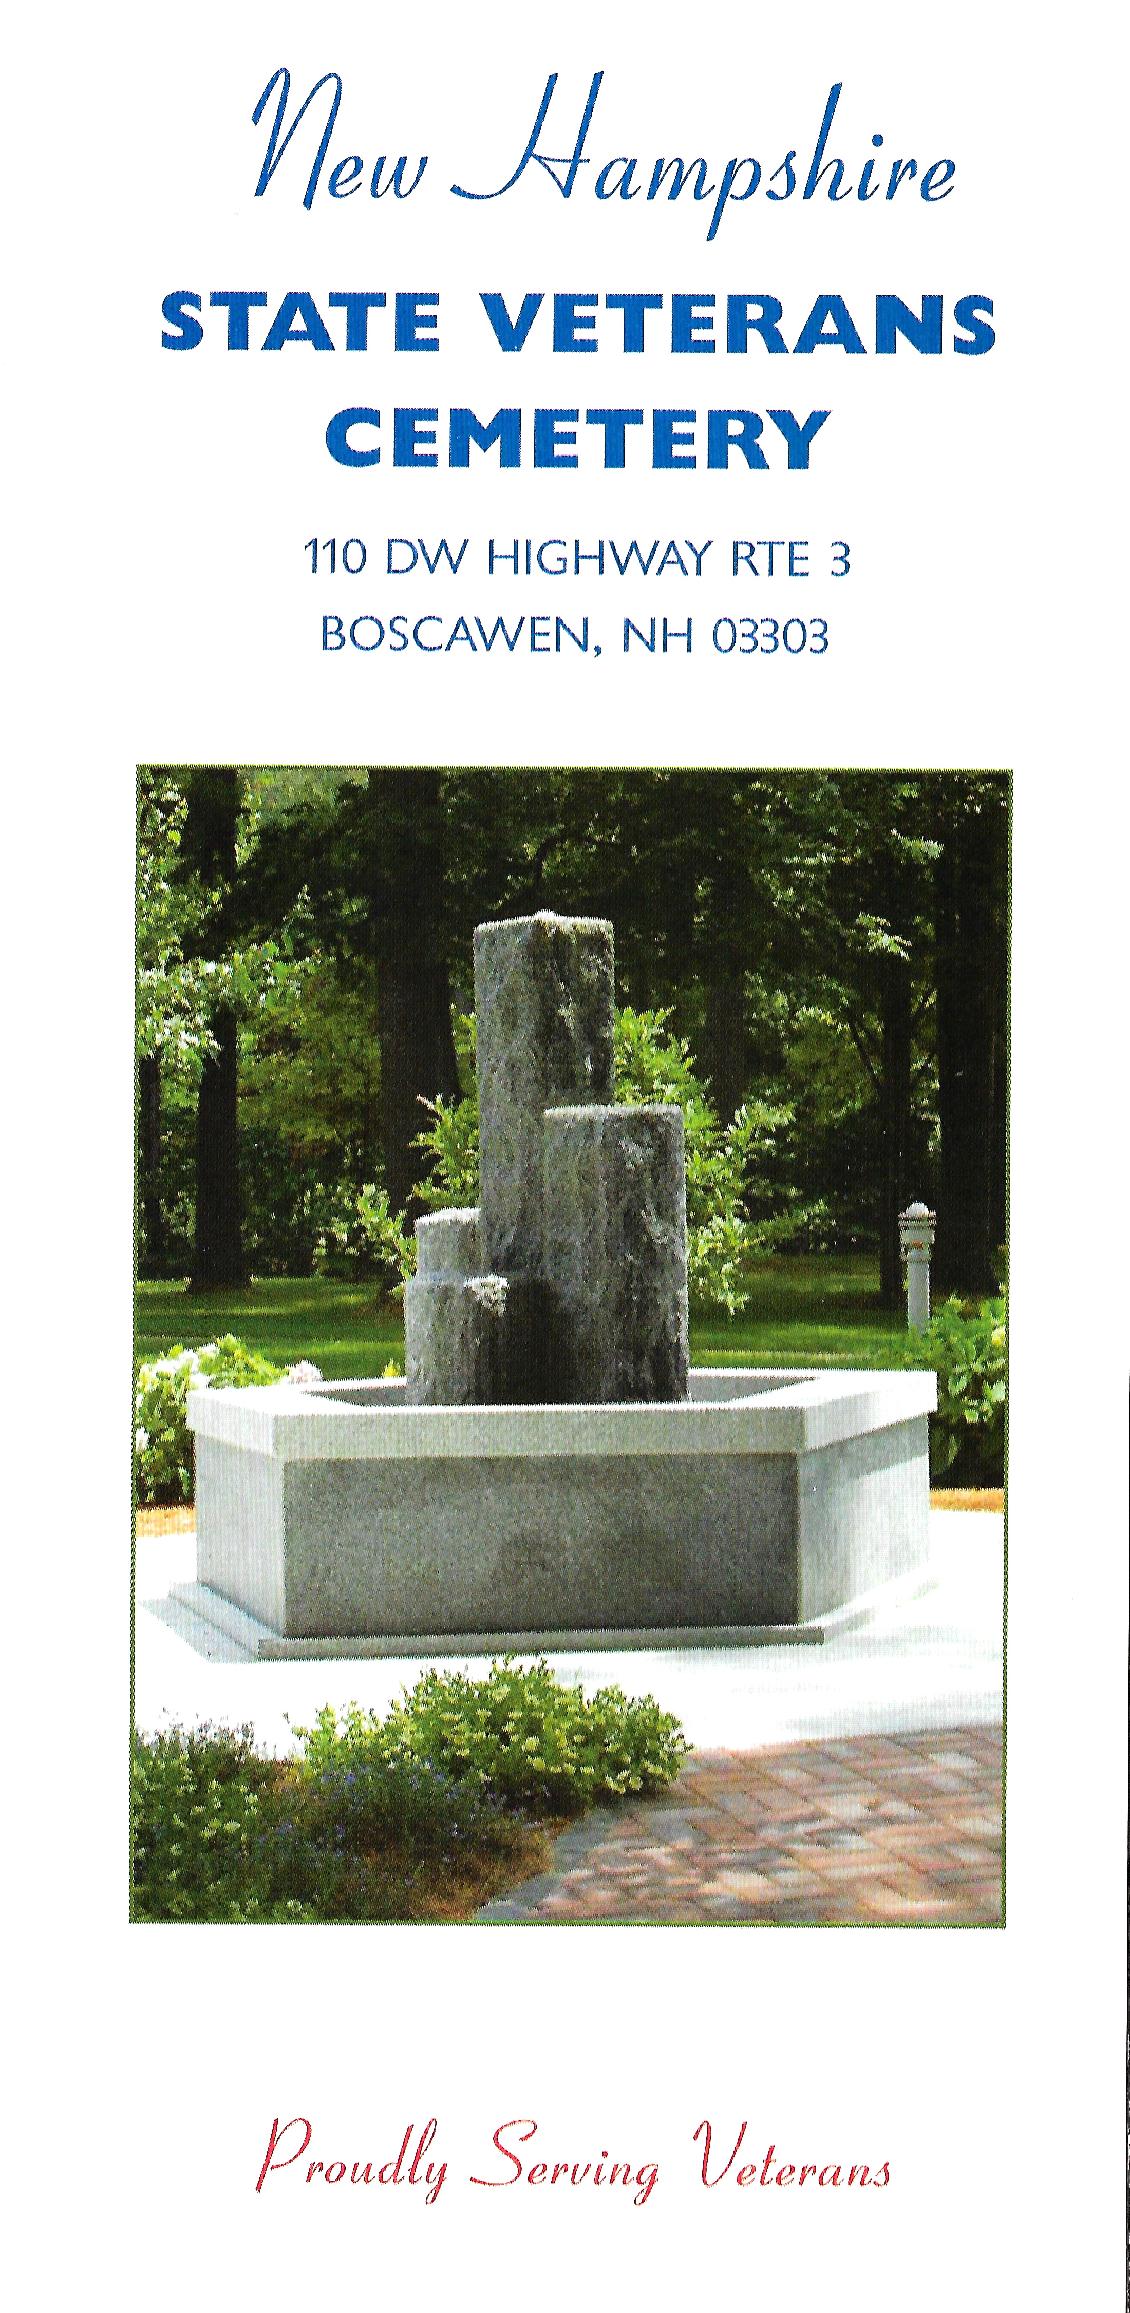 New Hampshire State Veterans Cemetery Brochure - 2010